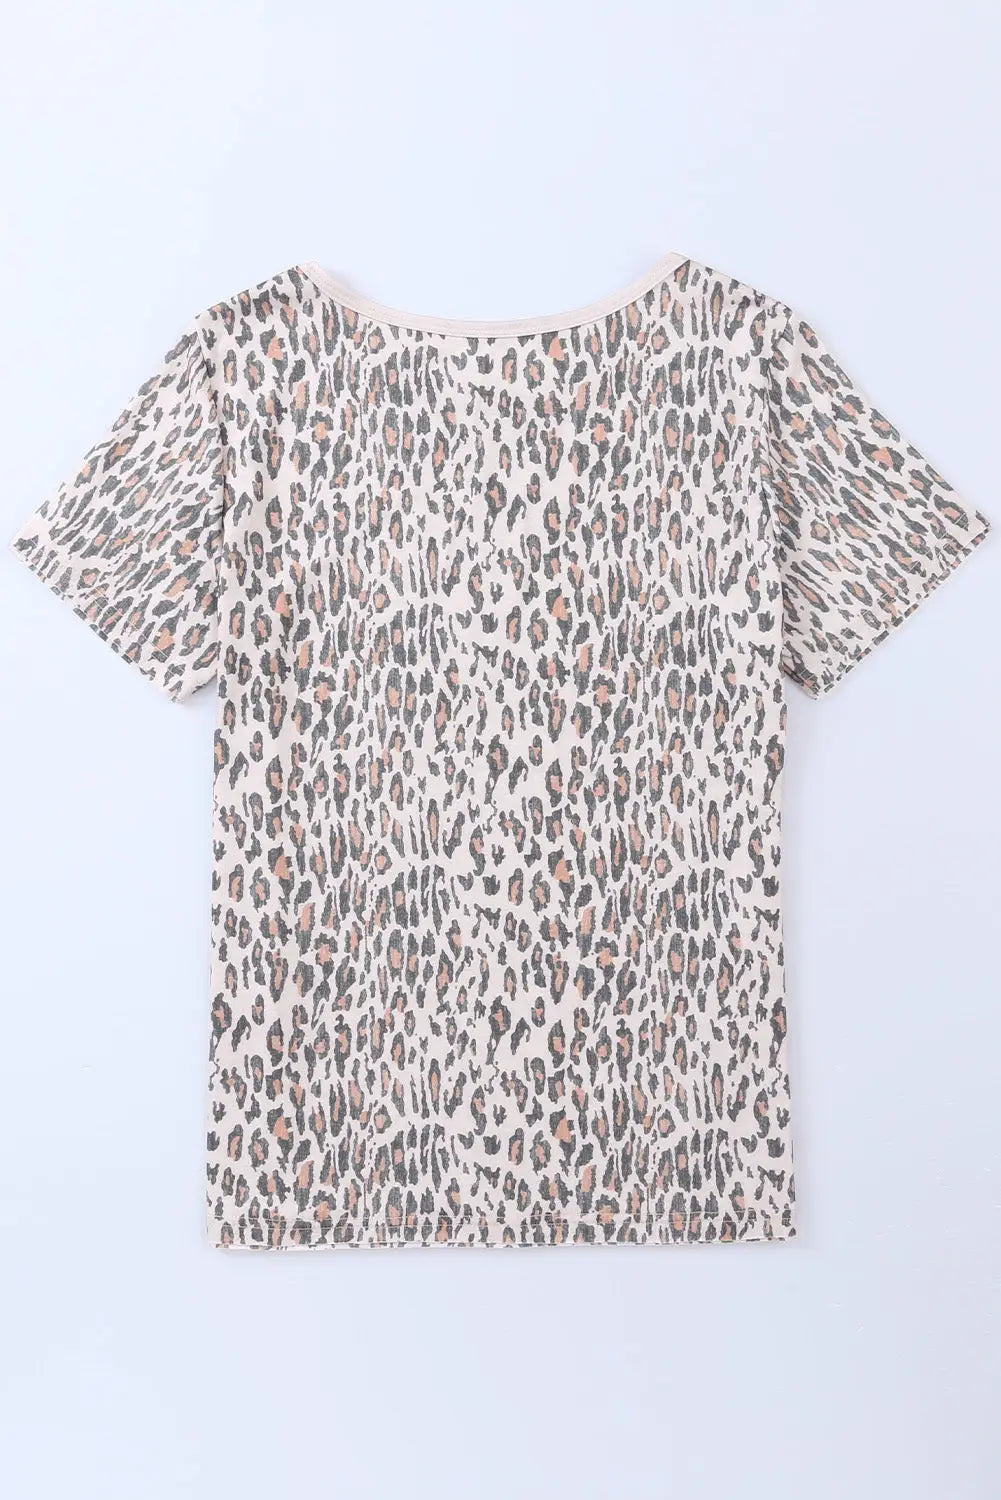 Leopard animal print casual t-shirt - tops